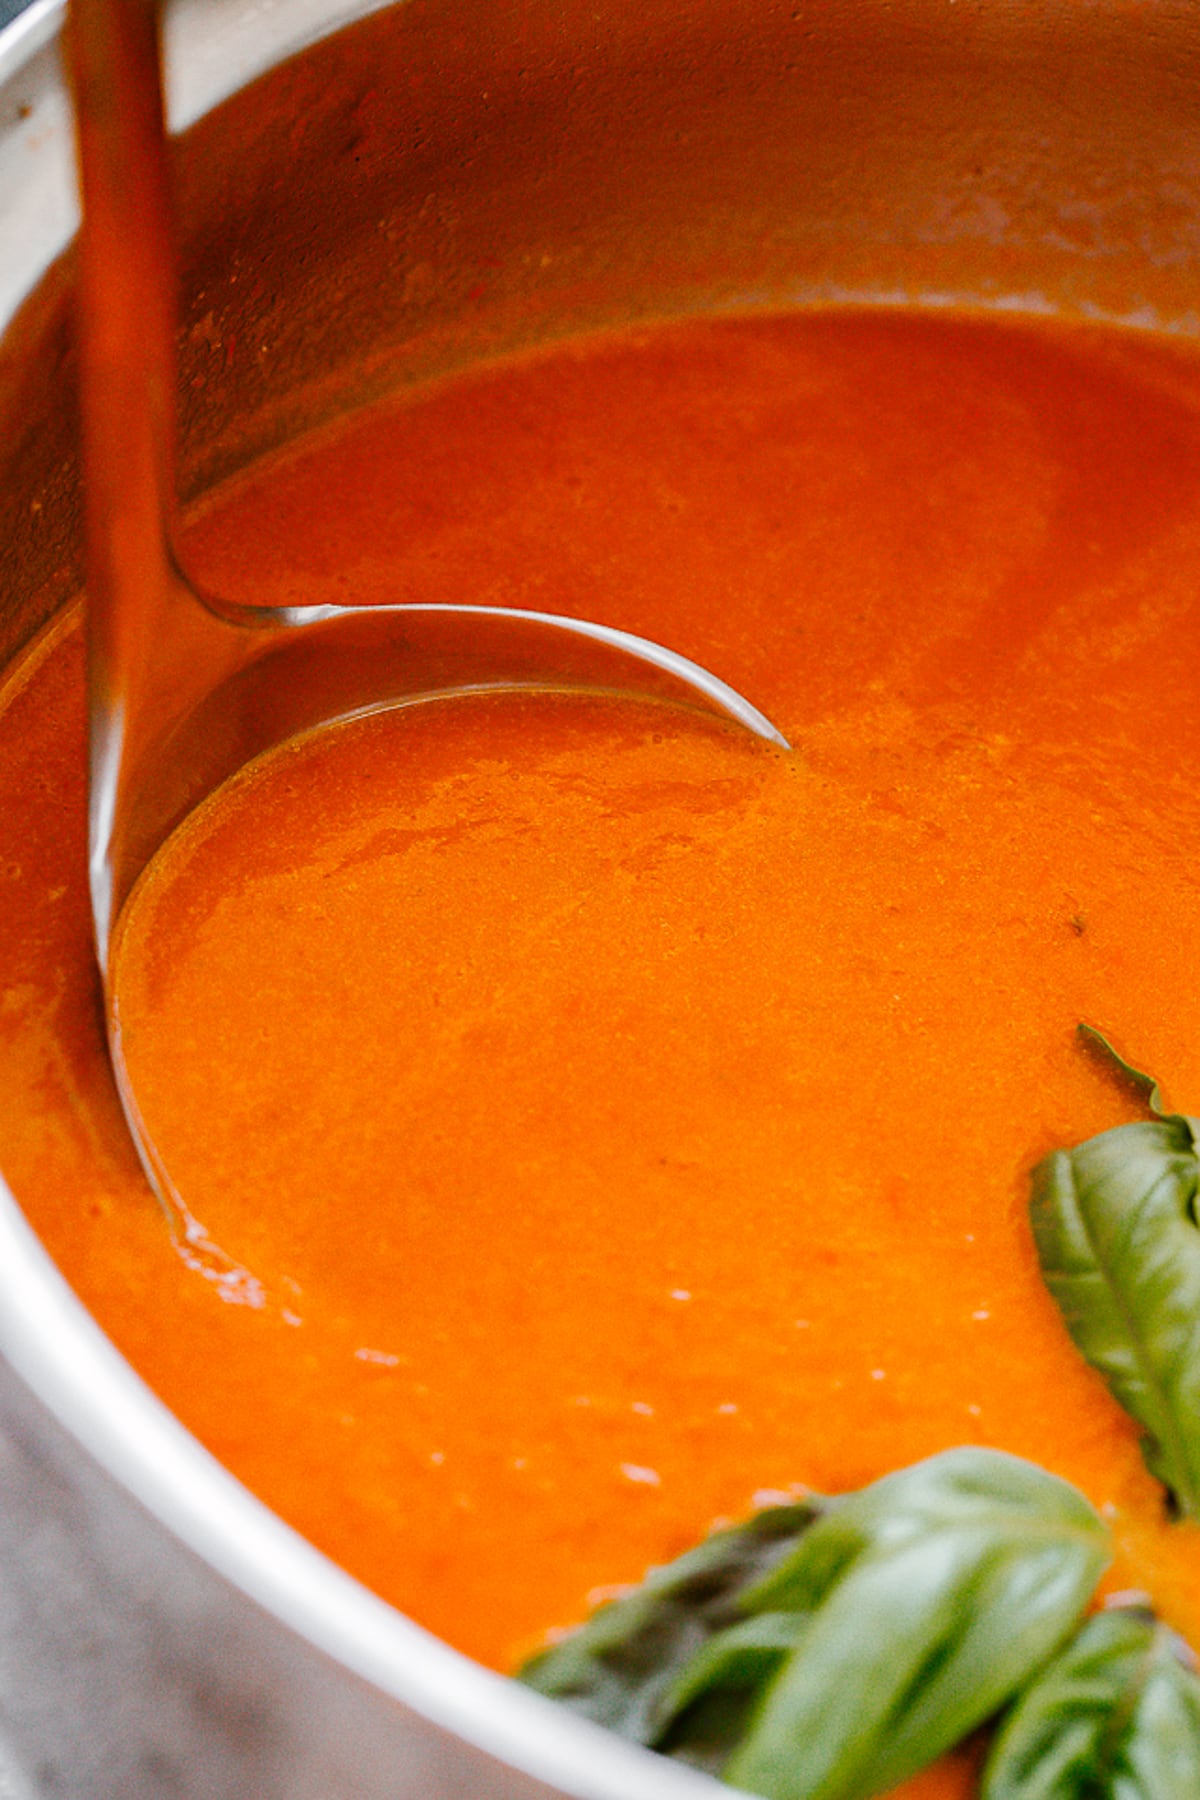 A ladle inside a pot with tomato soup.